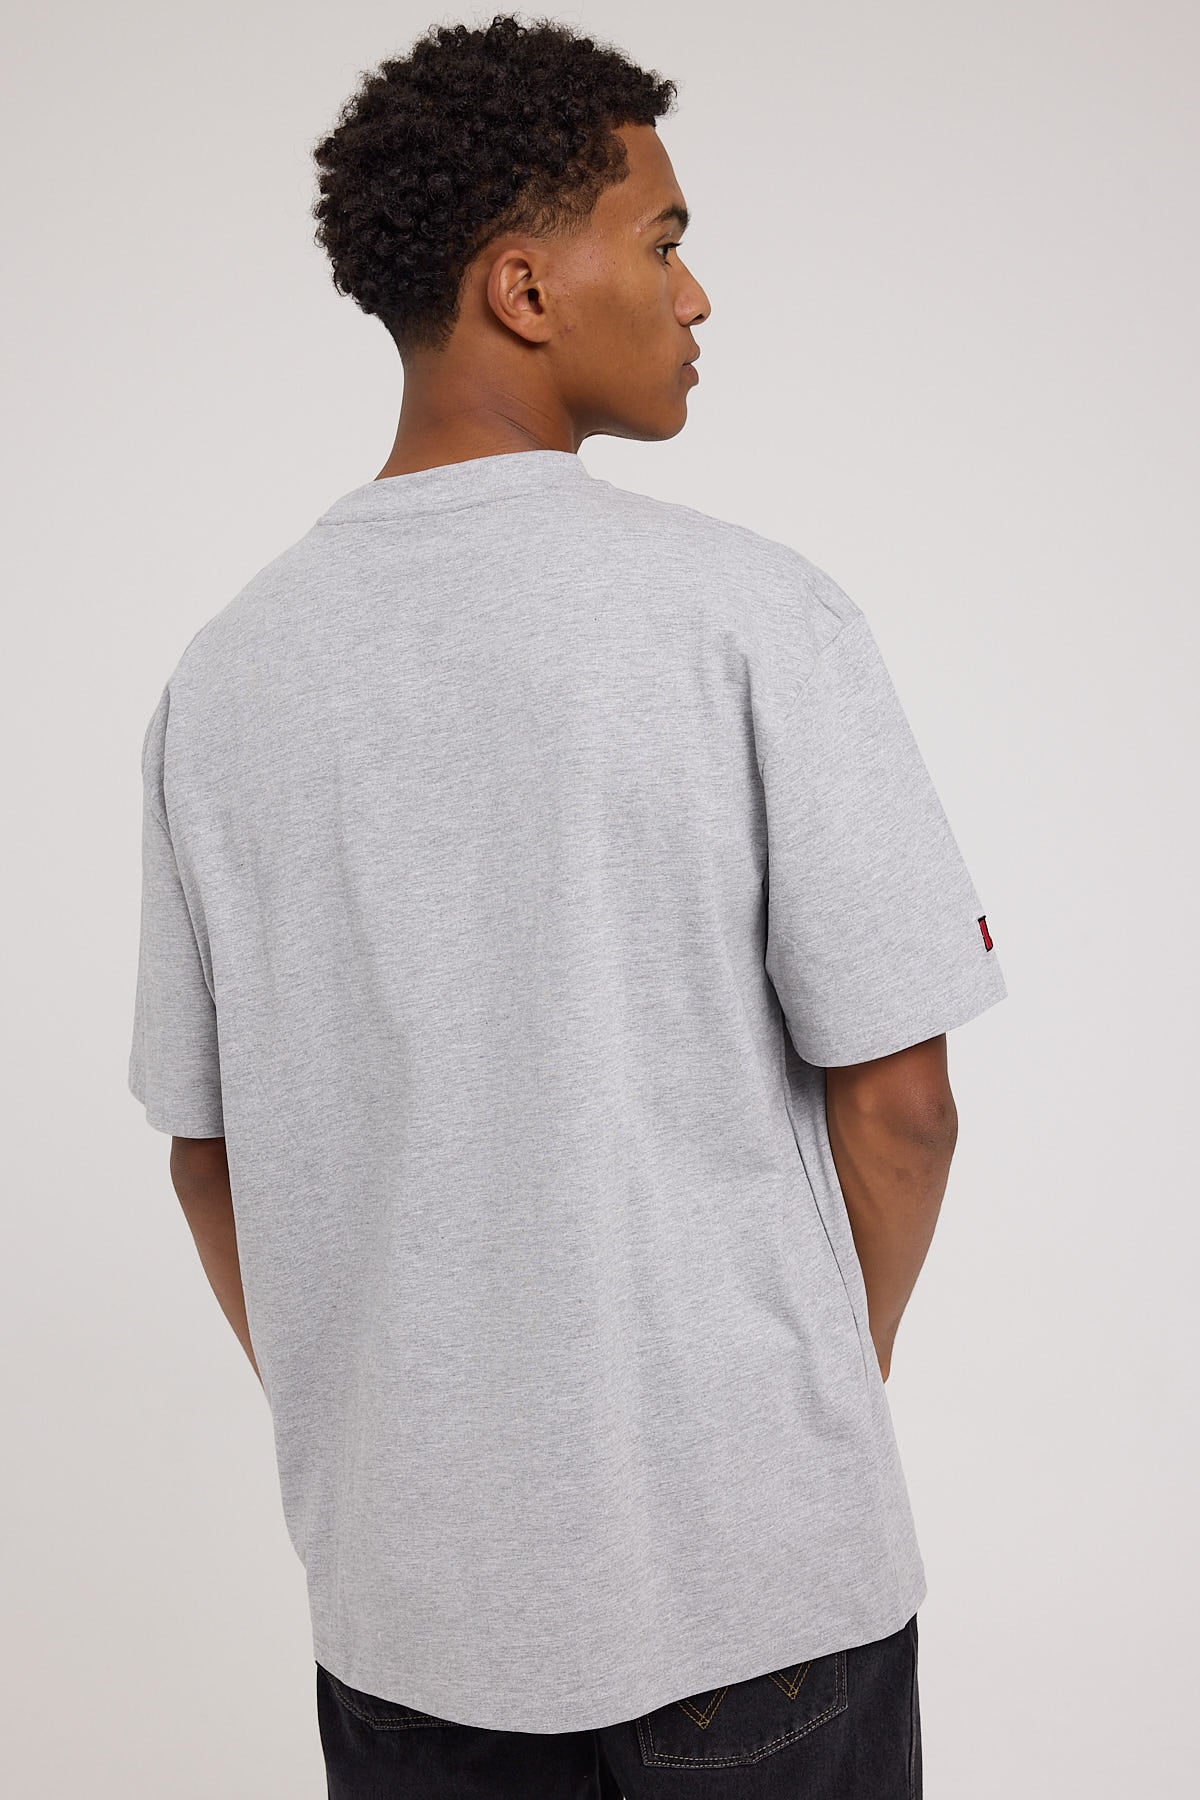 Fubu Corporate Intnl T-Shirt Grey